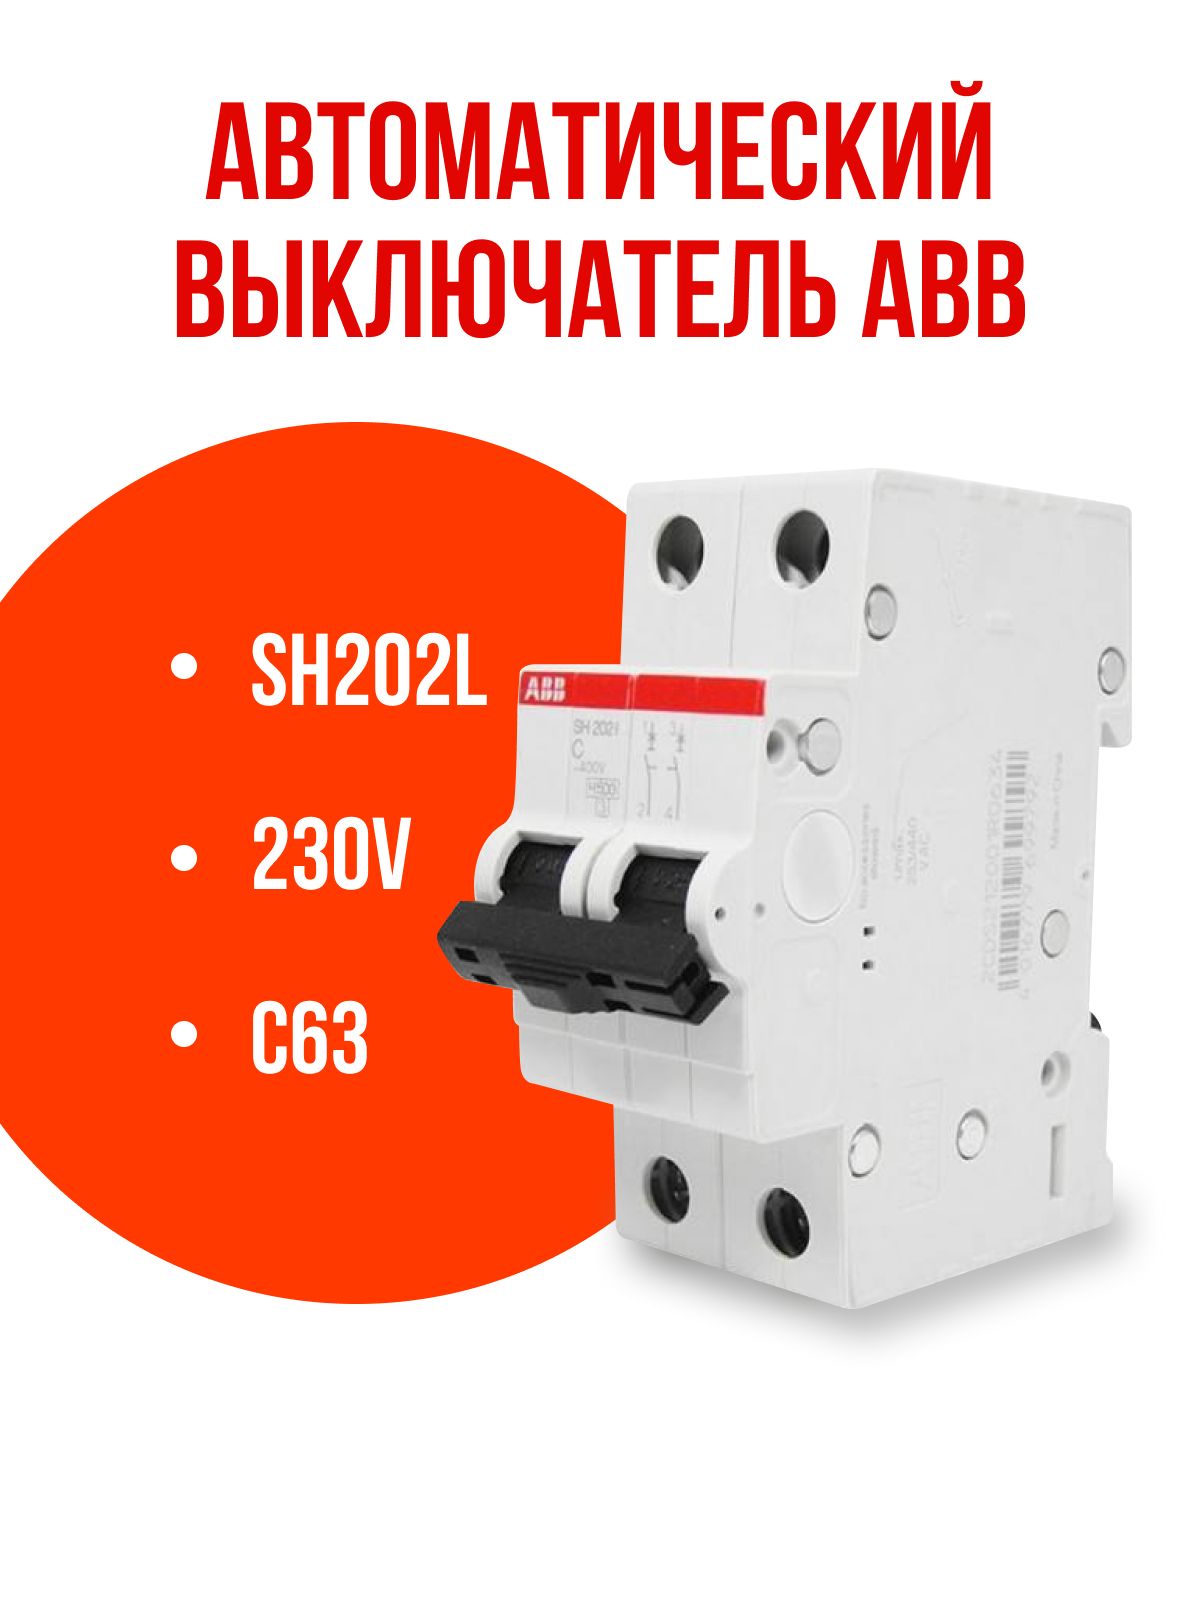 Автоматический выключатель sh201l. Выключатель однополюсной Вива. ABB sh201l c16 купить. Электроавтомат с Показание вольтажа. Sh 202 50 фото контактов.